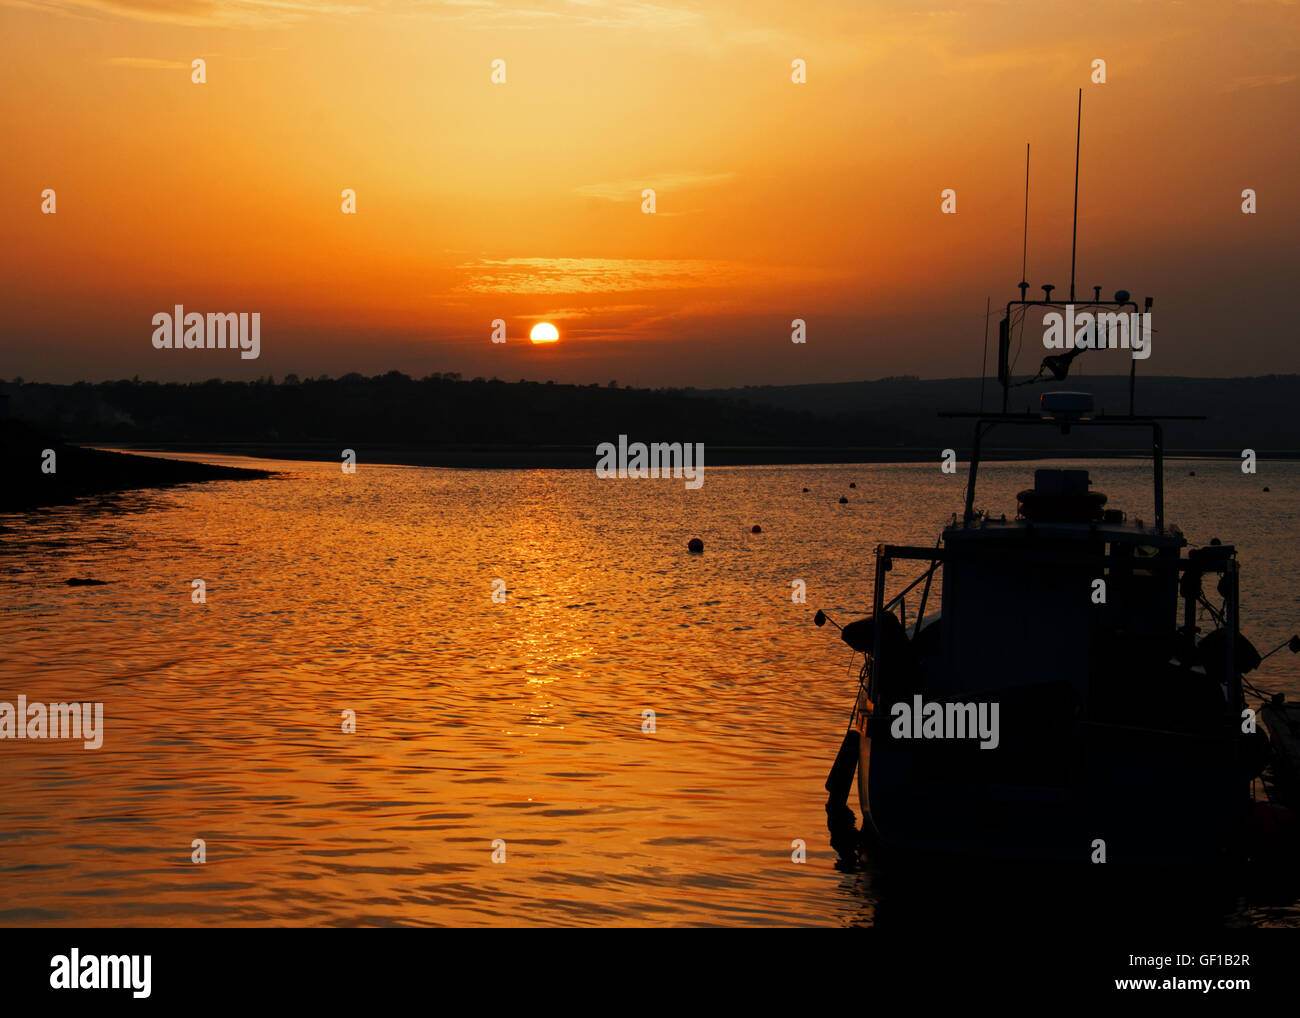 Fischerboot in Courtmacsherry Harbour, West Cork, Irland bei Sonnenuntergang, ideal Buch Cover. Stockfoto